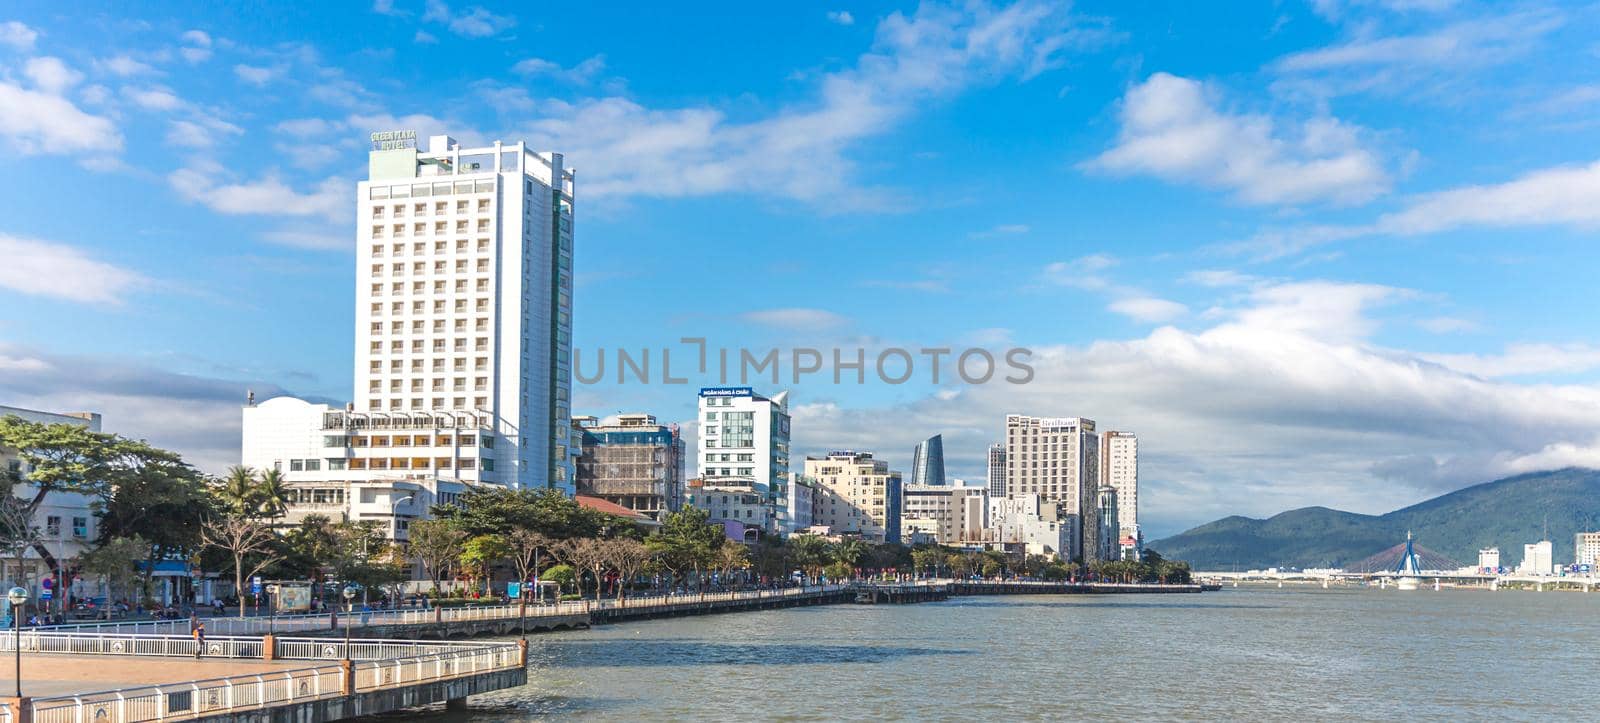 Da Nang,Vietnam - January 05, 2019 : panorama of DaNang city with Han River